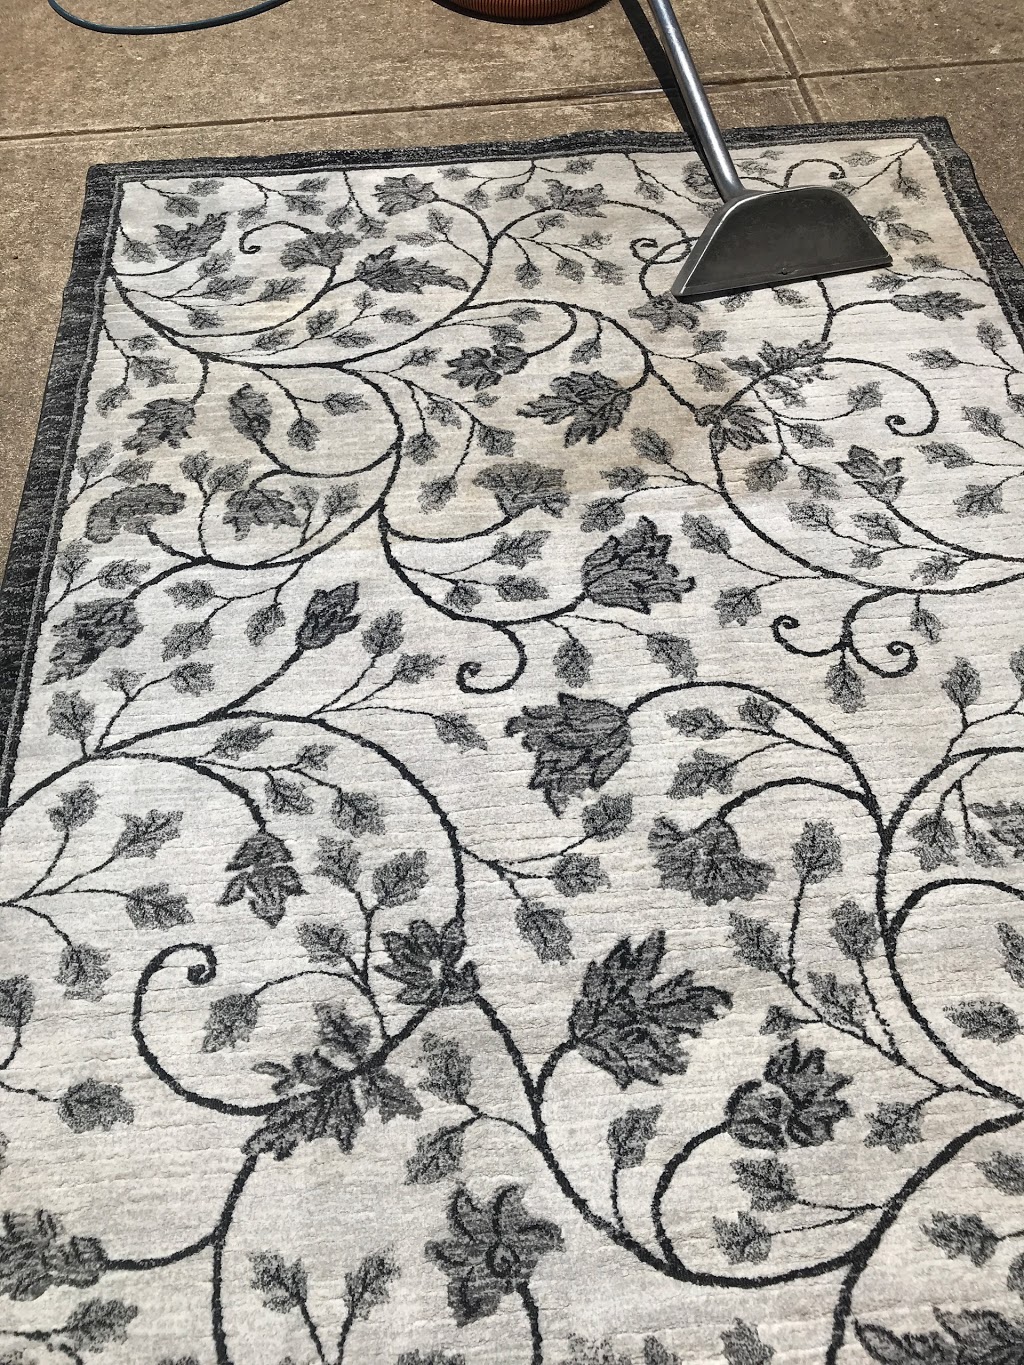 Palm Springs Carpet Cleaning | 99 Black Rd, Flagstaff Hill SA 5159, Australia | Phone: 0411 404 989